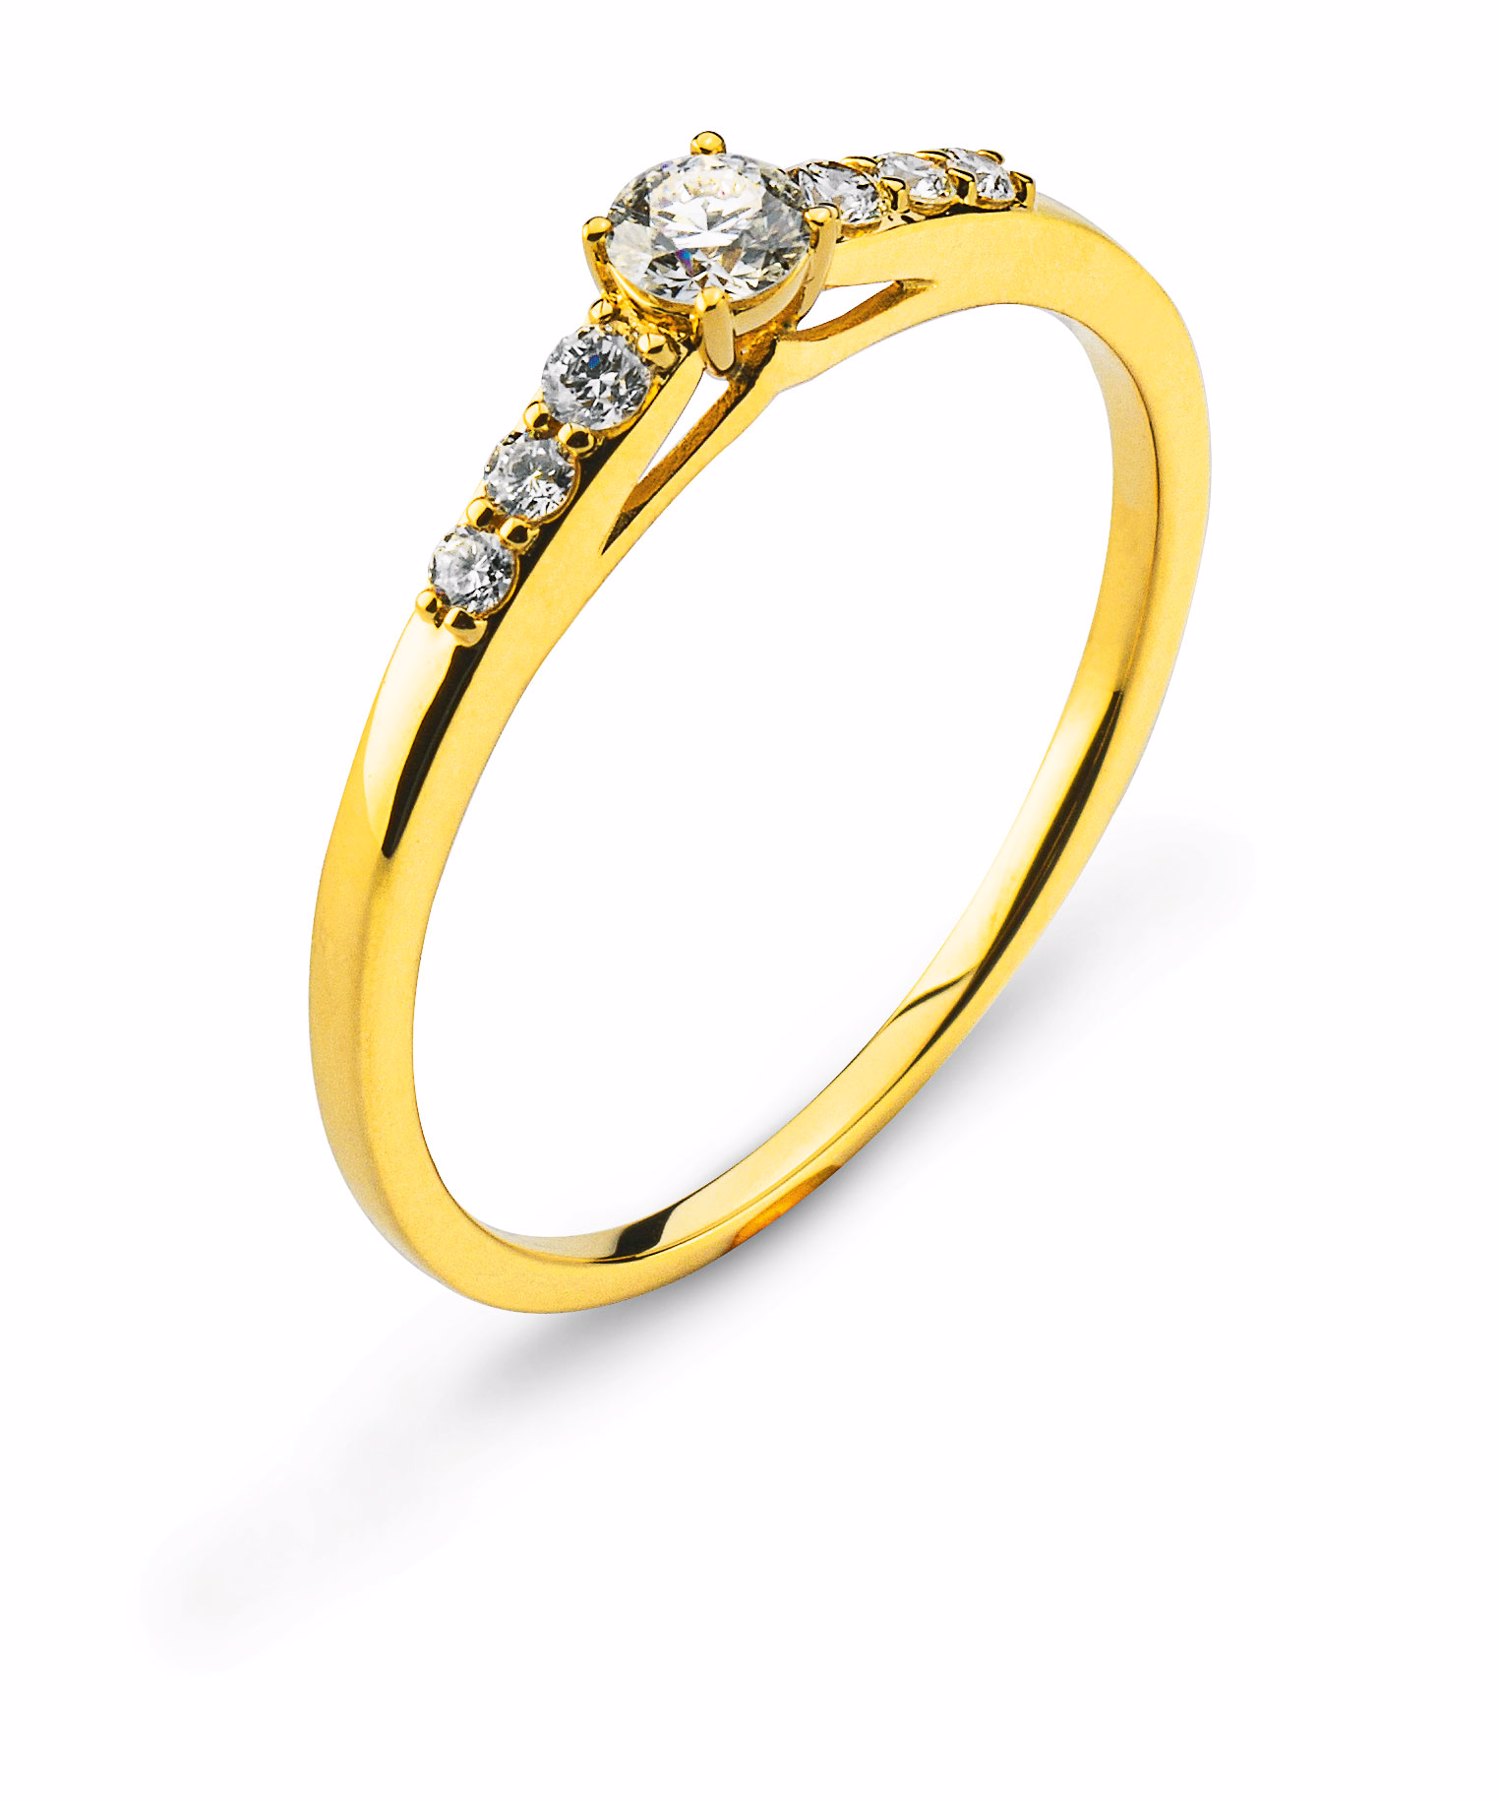 AURONOS Prestige Or jaune 18K diamants 0.24ct